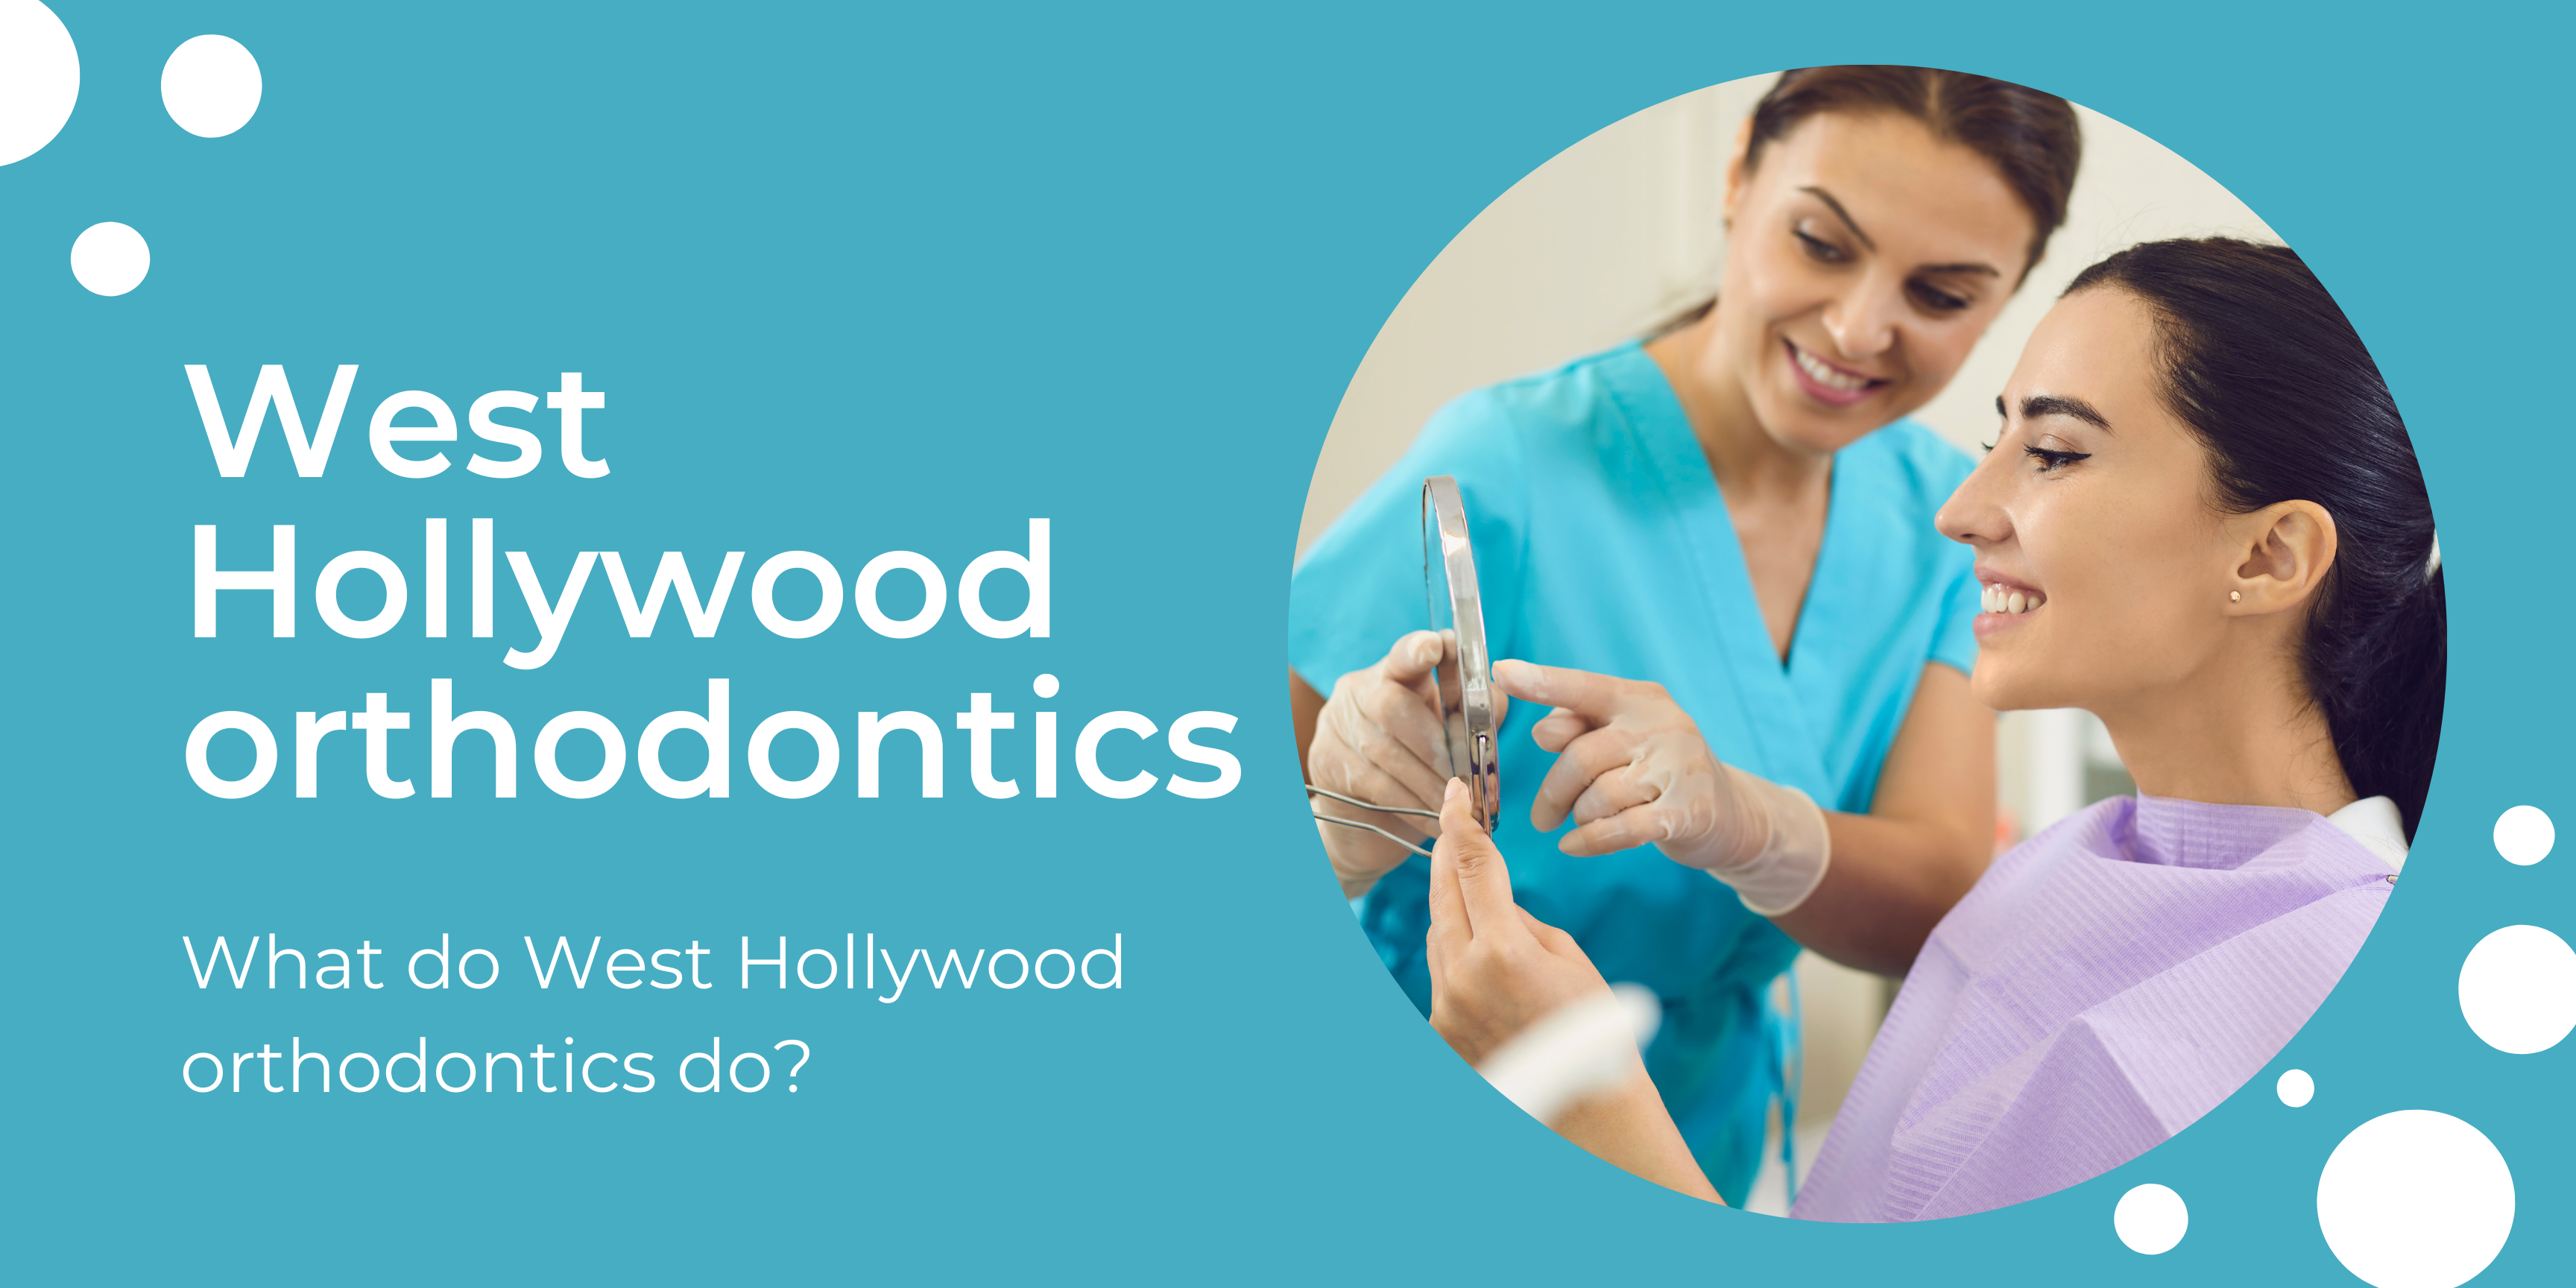 West Hollywood orthodontics